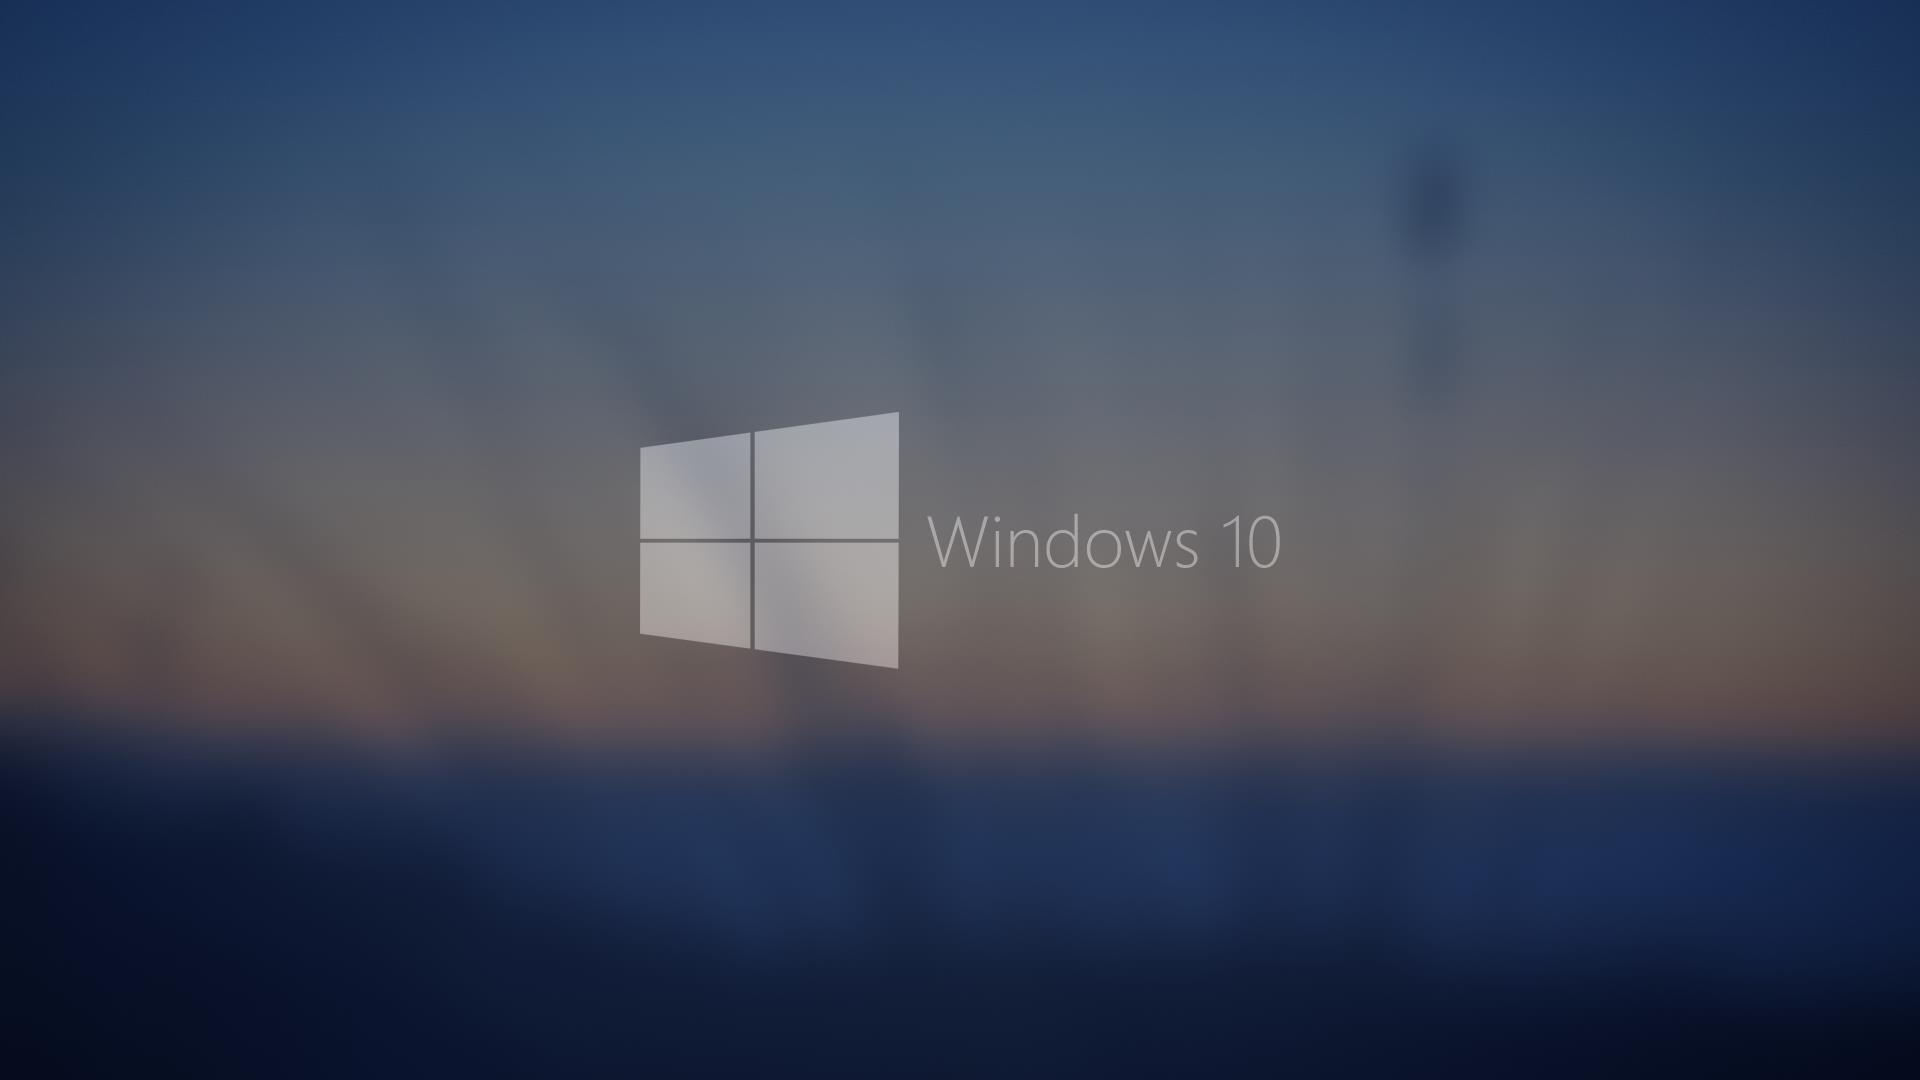 Windows 10 Wallpaper Microsoft - Supportive Guru